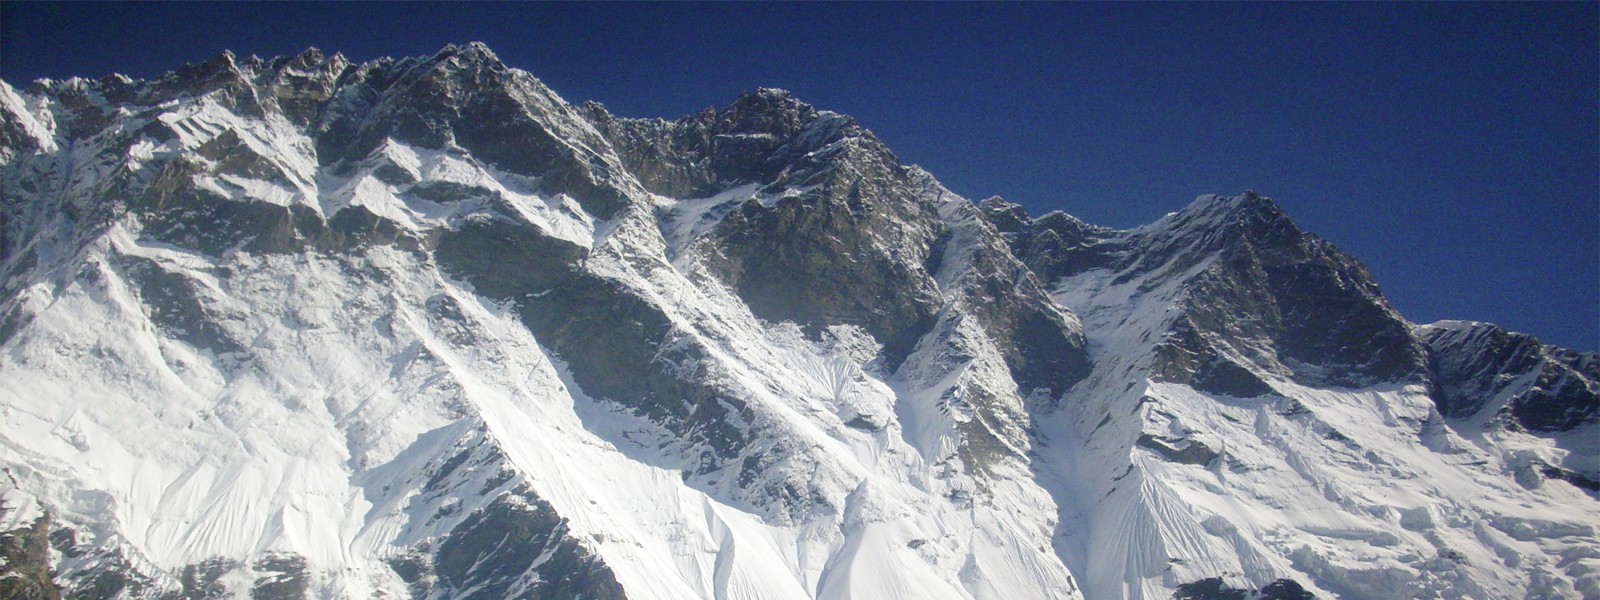 Lhotse Shar Expedition Base Camp